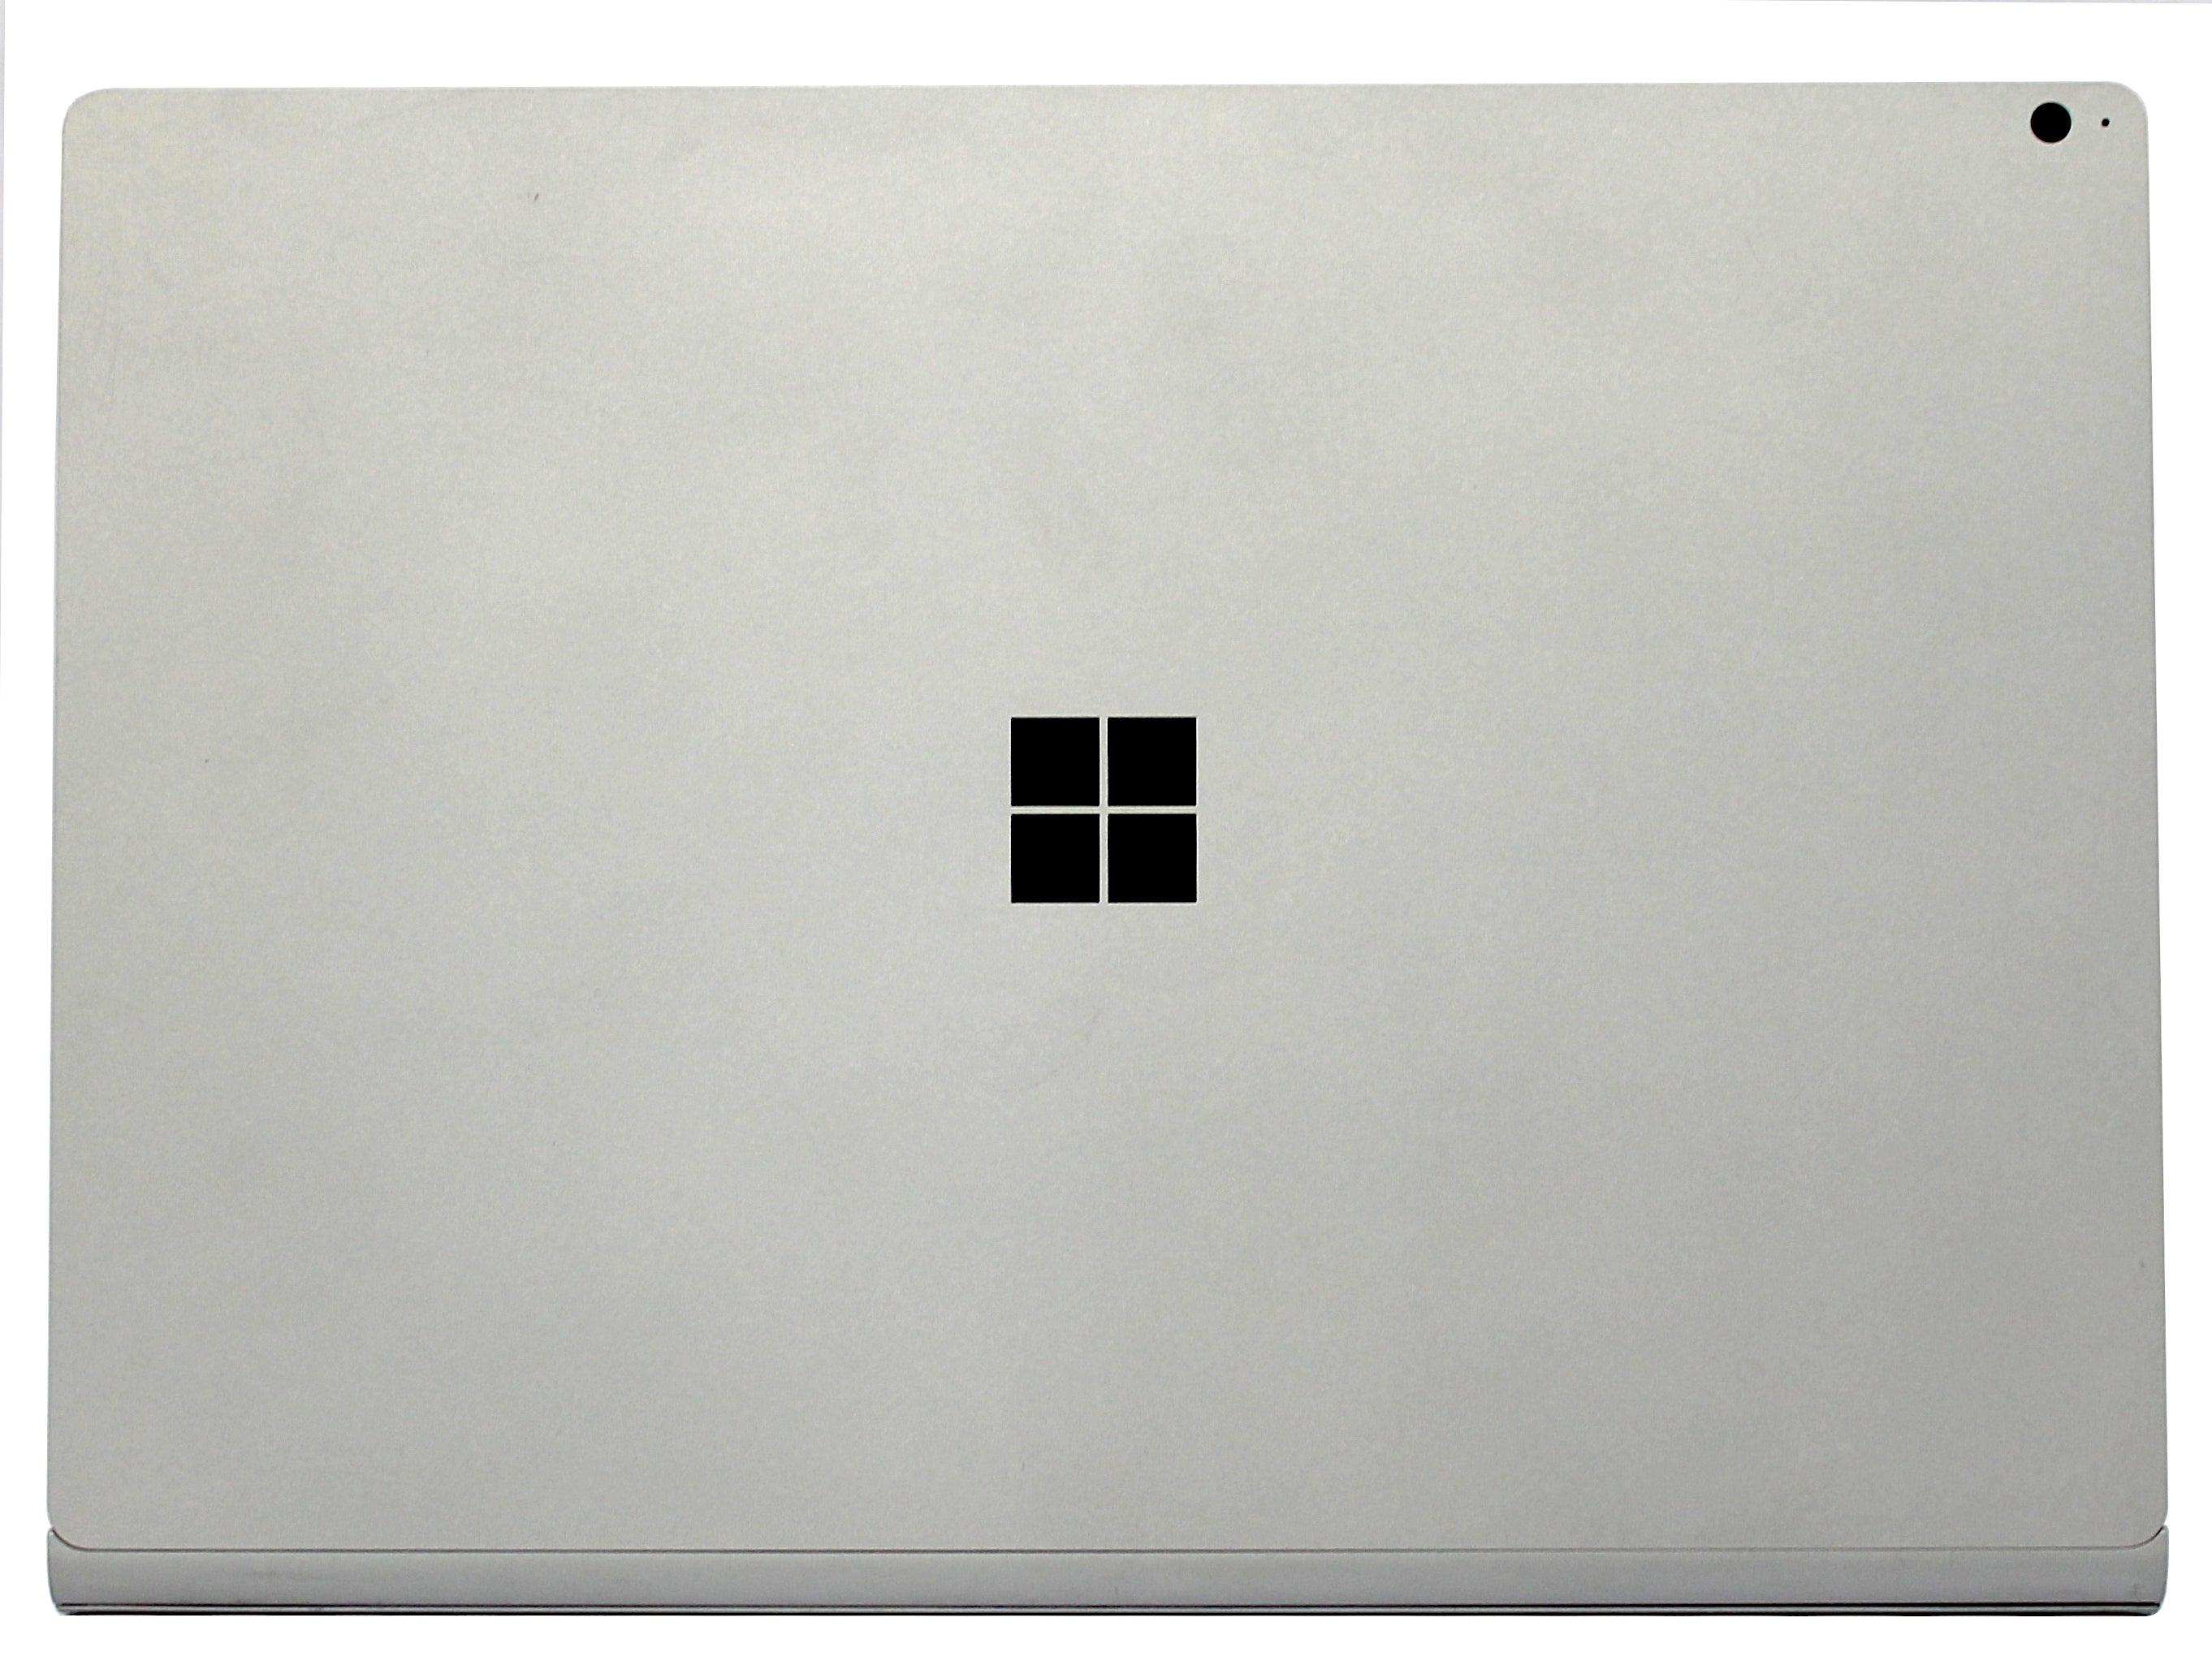 Microsoft Surface Book 2, 15" Intel Core i7, 16GB RAM, 512GB SSD, Windows 10